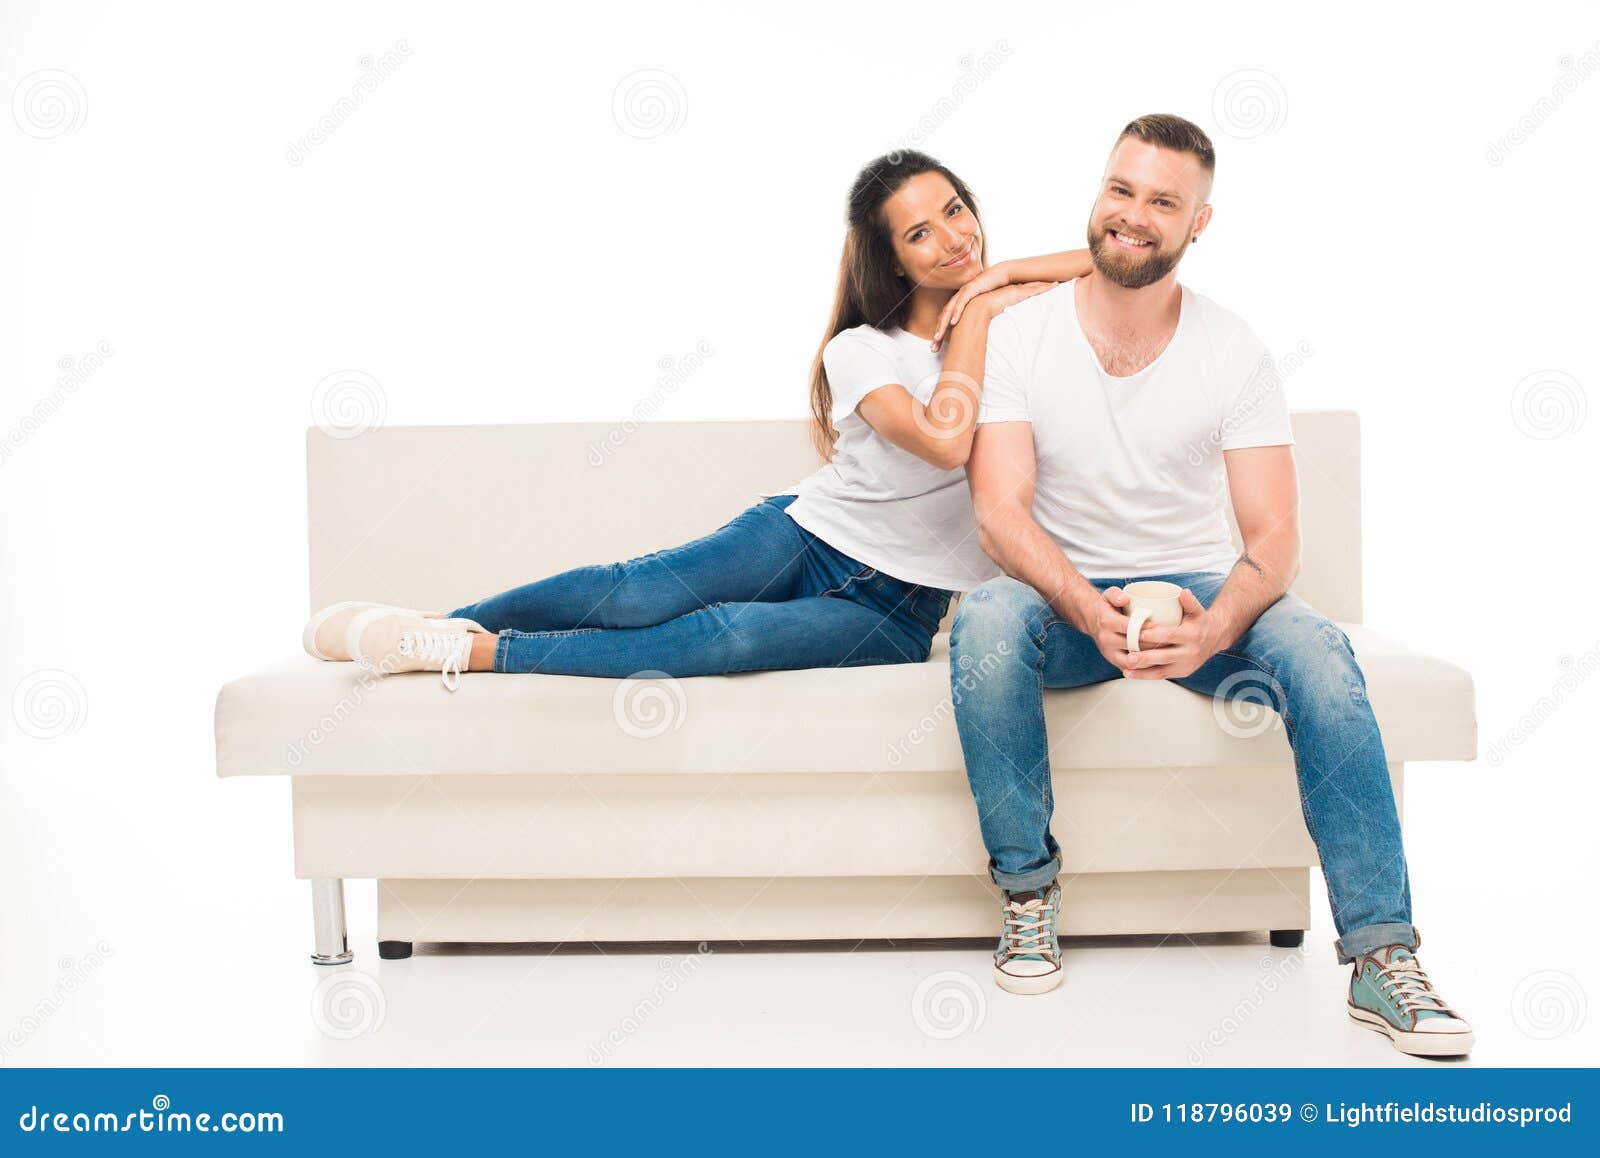 Парочка на белом диване крокус. Пара на диване. Сидит на диване. Фотосессия на диване пара. Влюбленные сидят на диване.